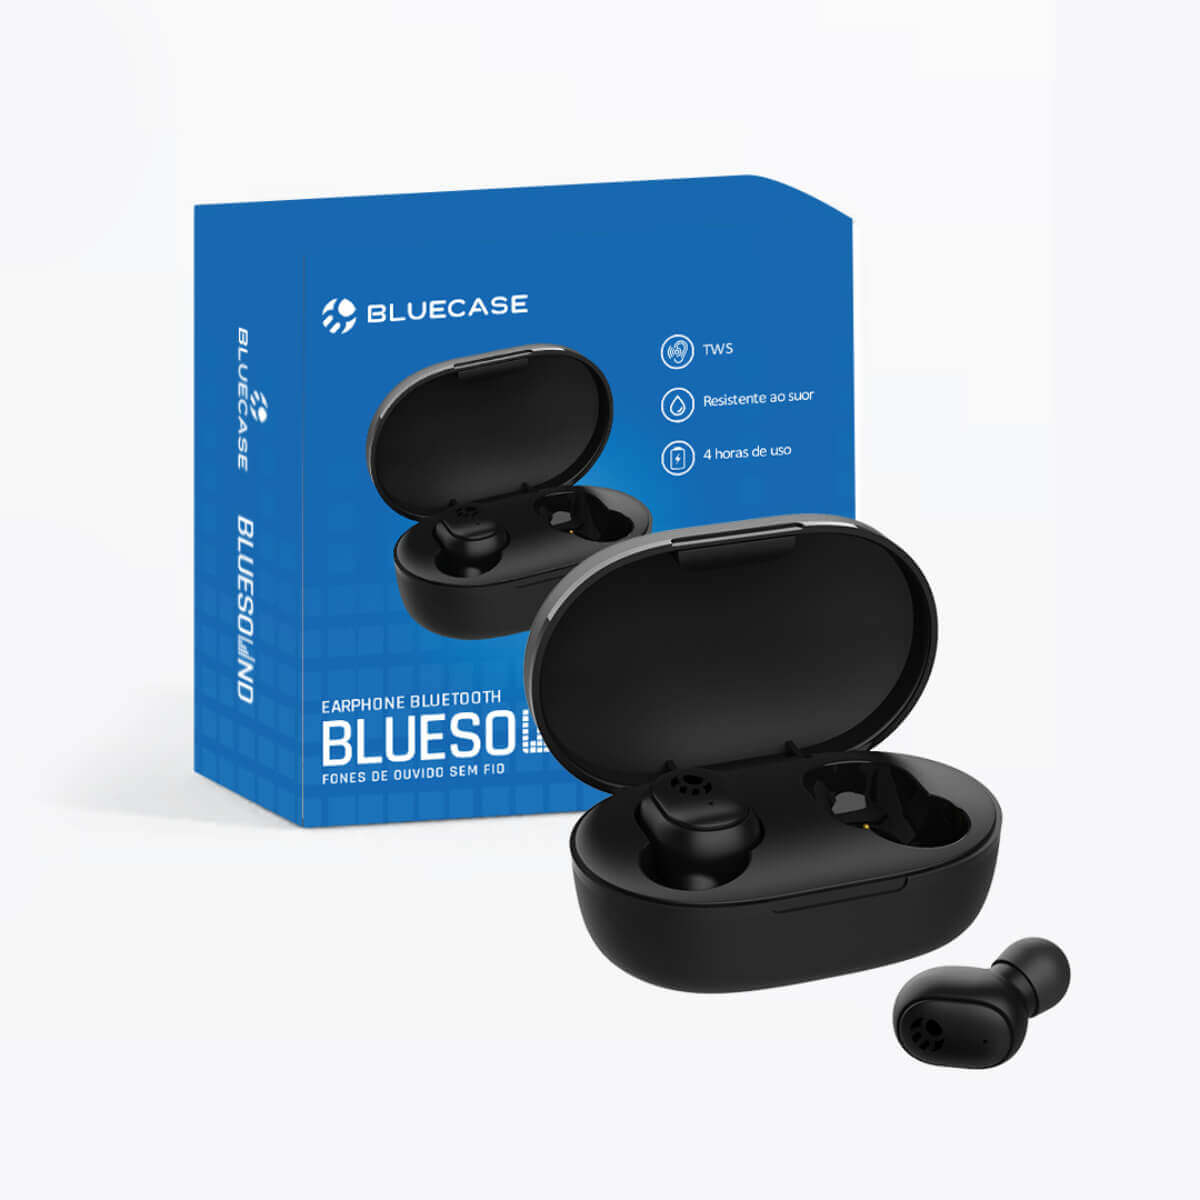 EARPHONE BLUETOOTH BLUESOUND TWS - 1